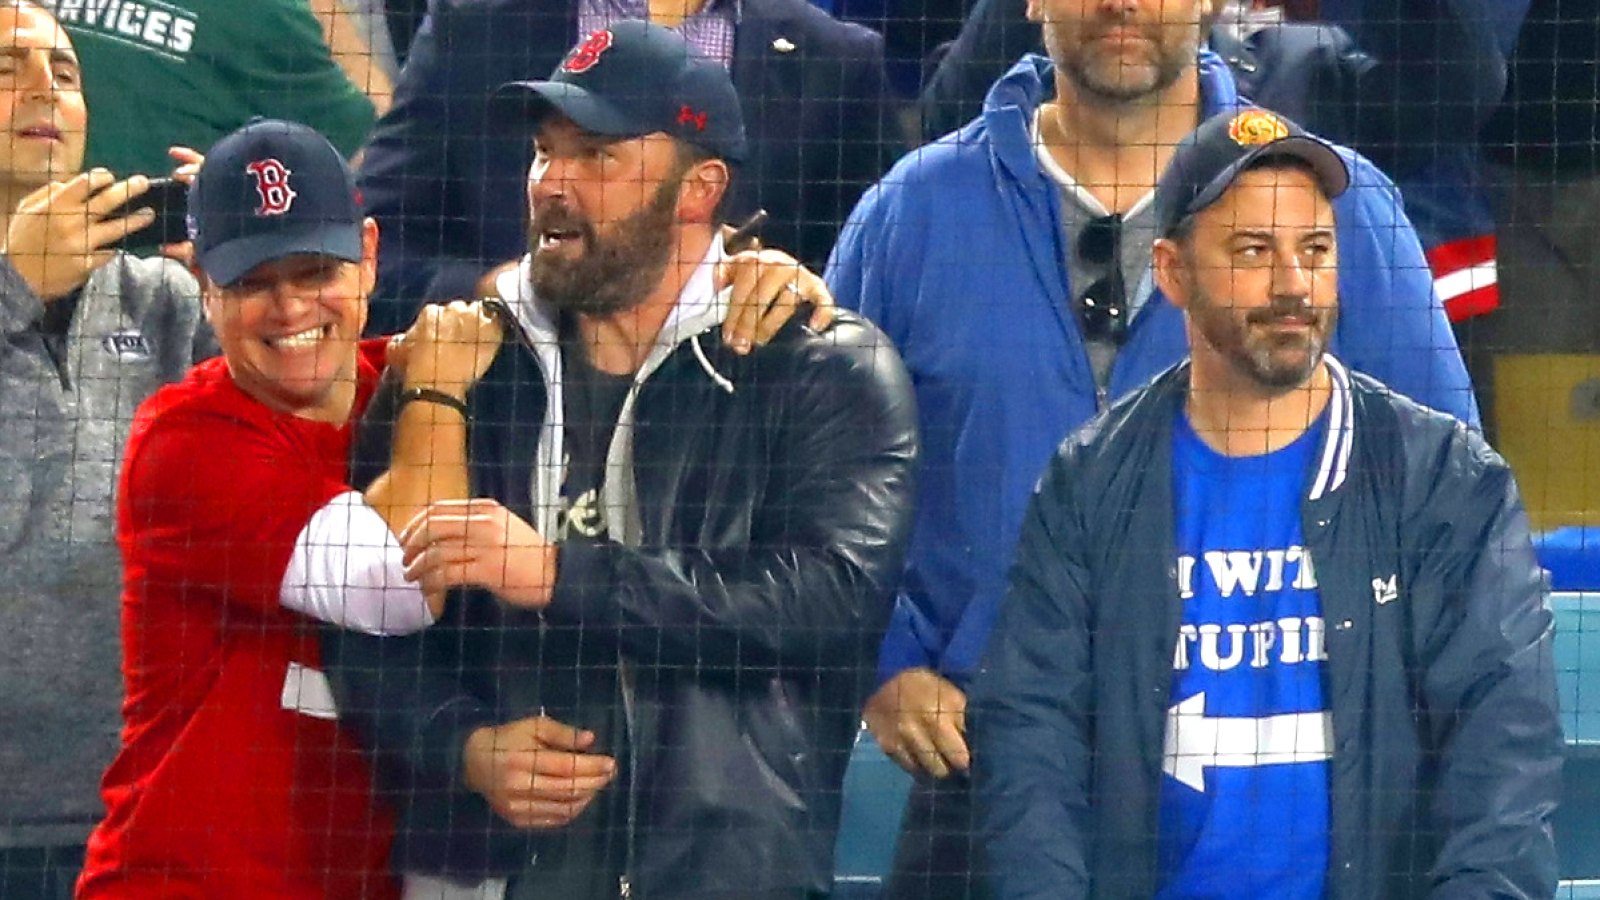 Jimmy Kimmel (R) looks on as Matt Damon and Ben Affleck celebrate the Boston Red Sox winning the World Series v The Los Angeles Dodgers.